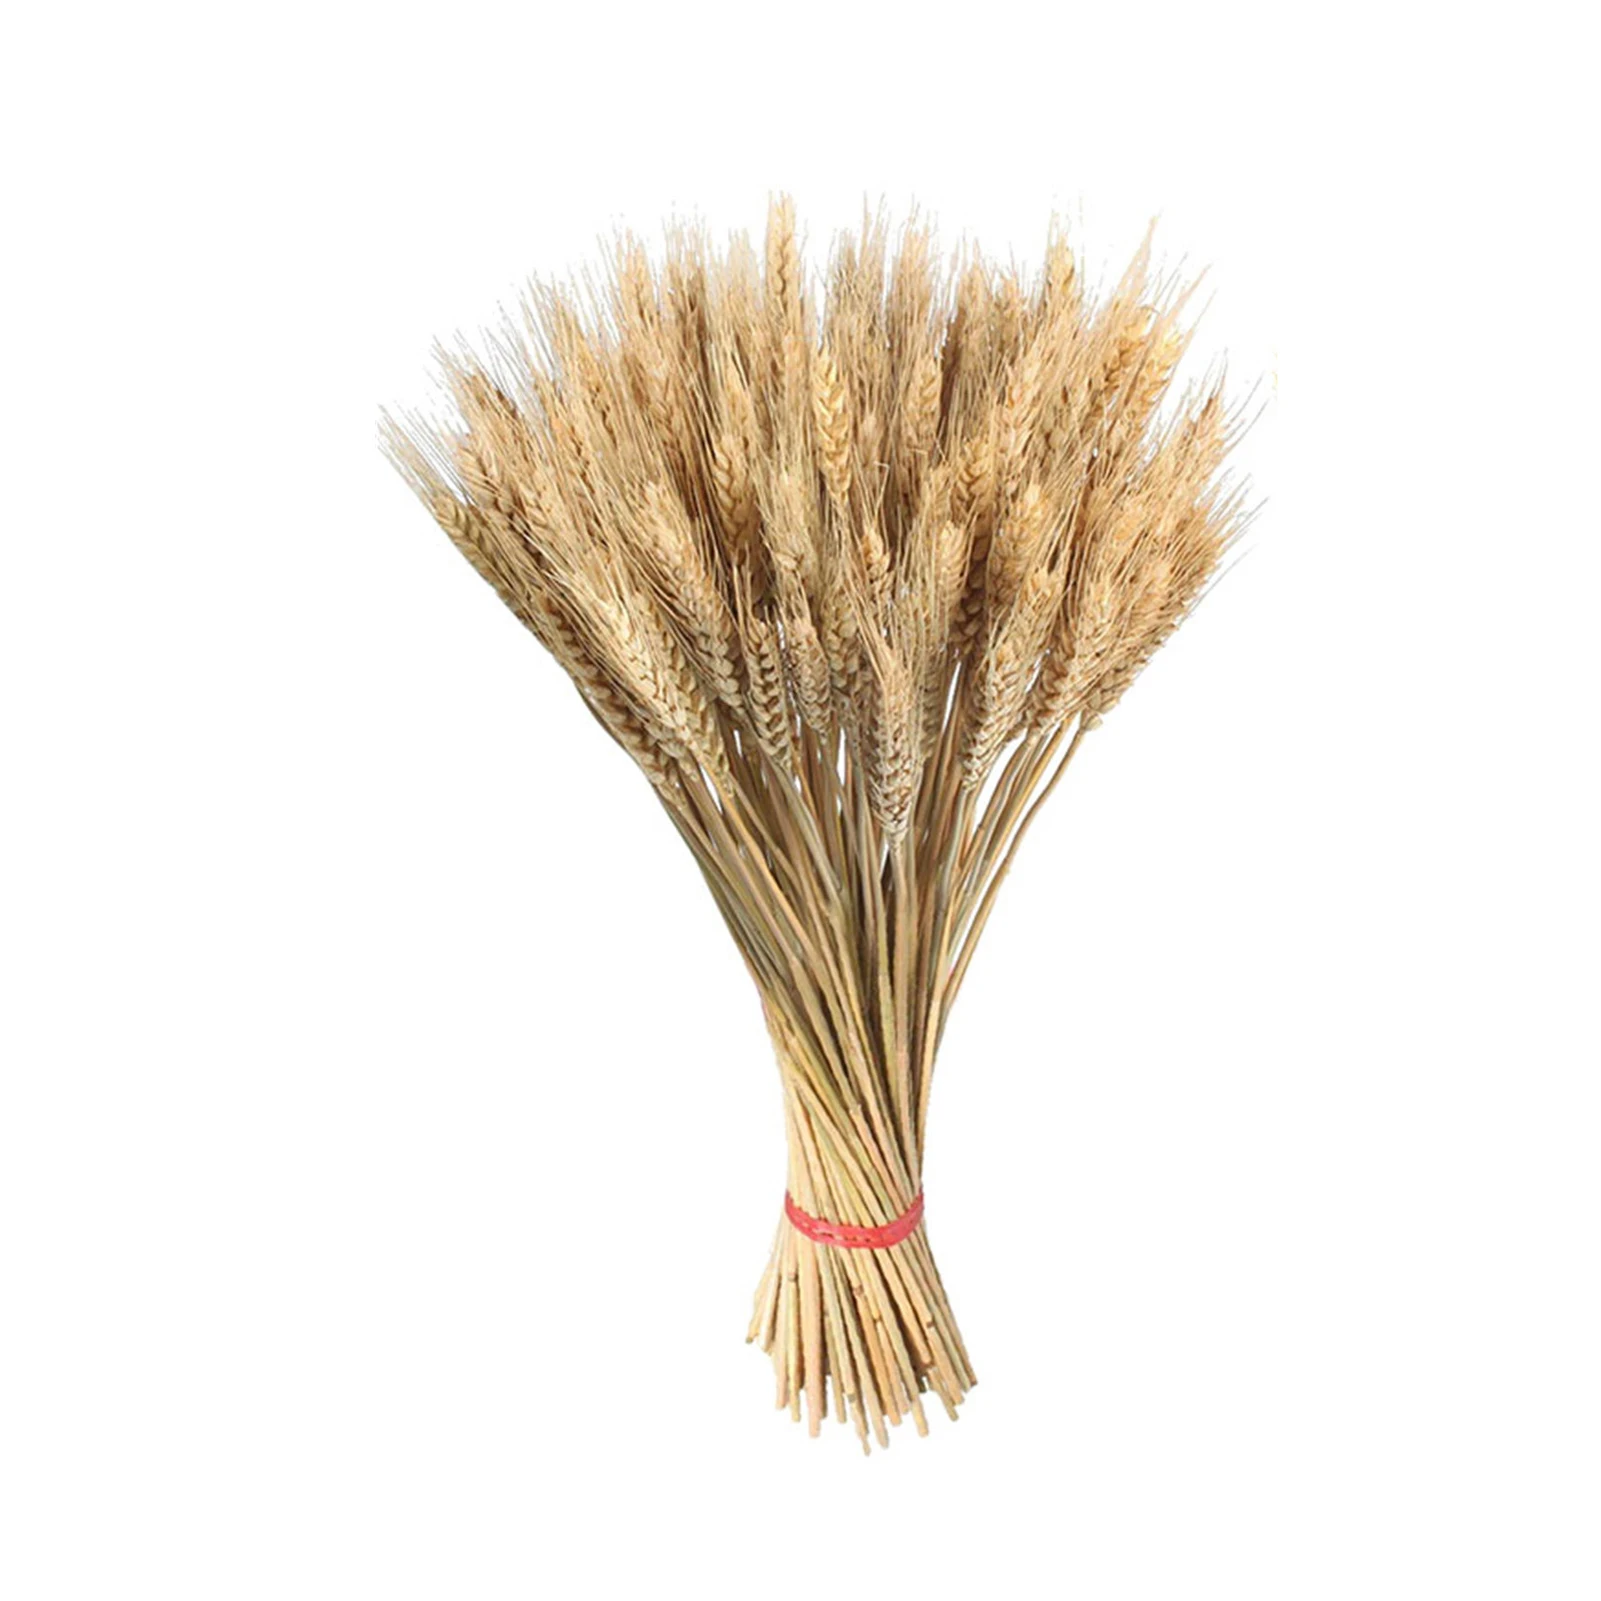 

100Pcs Wheat Ears Dried Wheat Sheaves Bundle Dried Golden Wheat Grass Artificial Flowers Fall Arrangement DIY Design Home Table